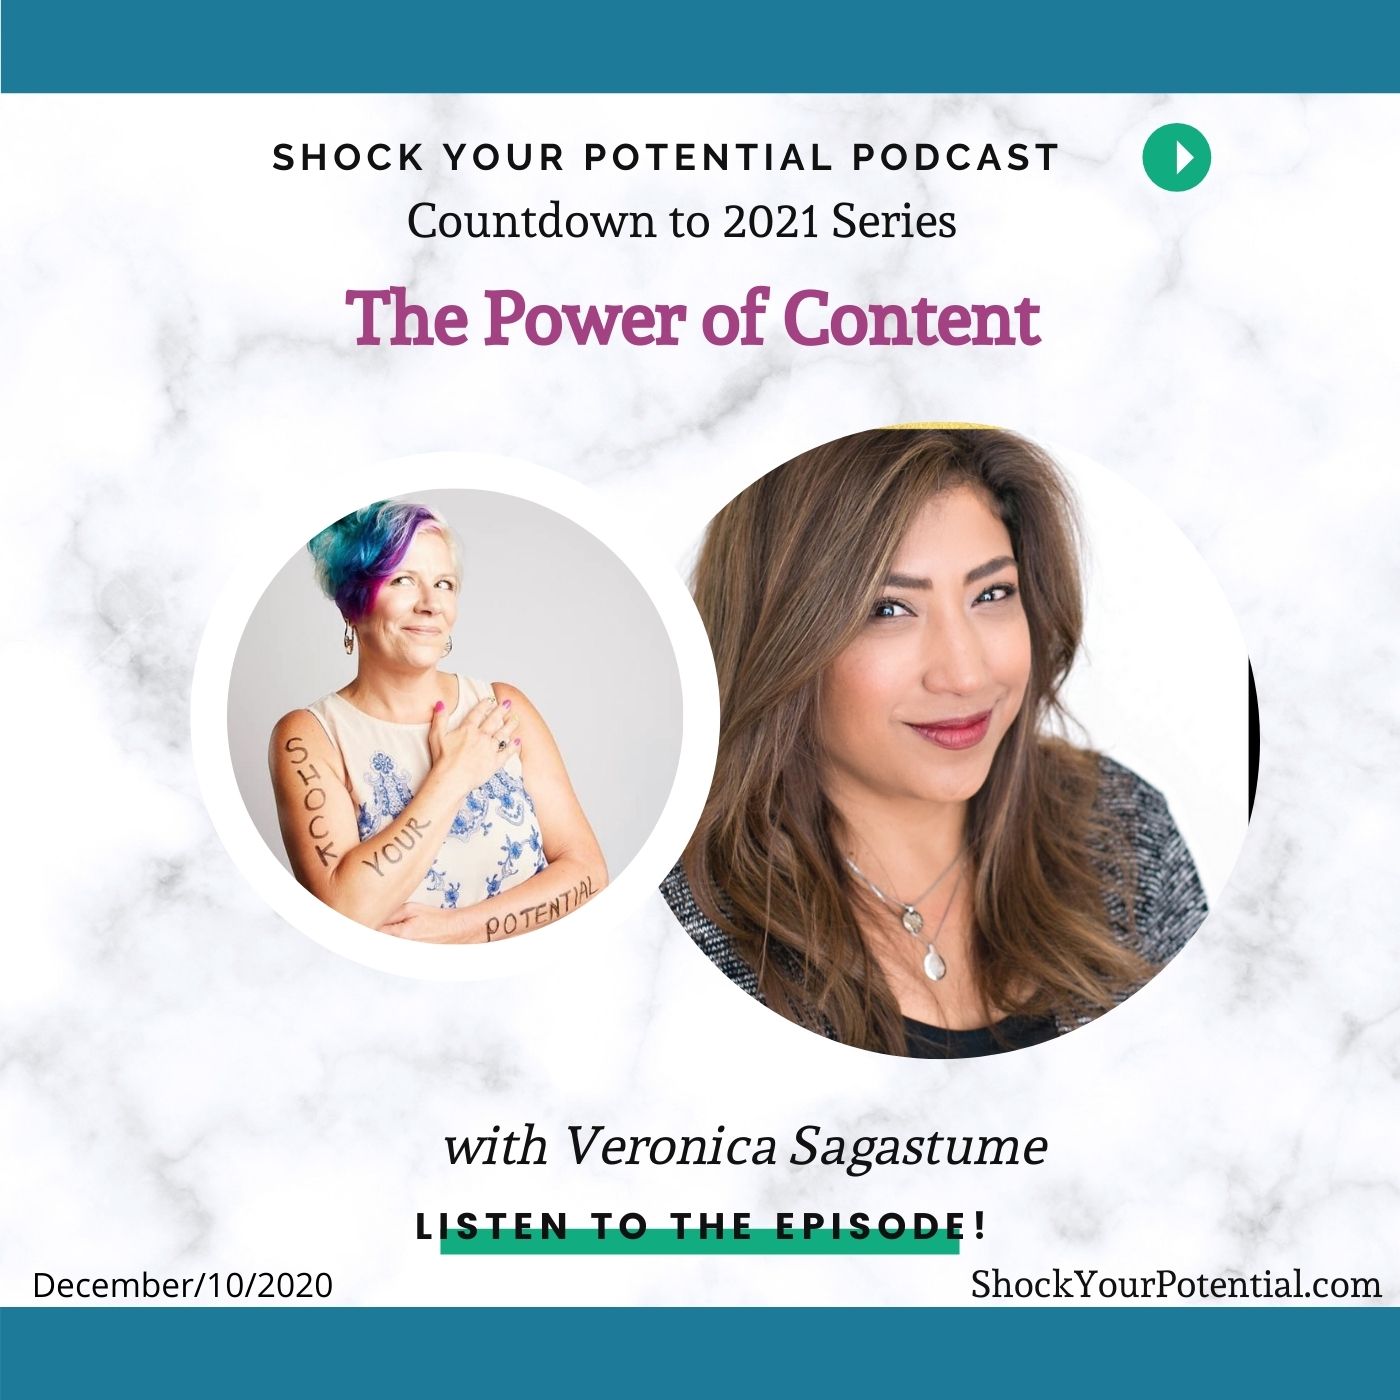 The Power of Content- Veronica Sagastume